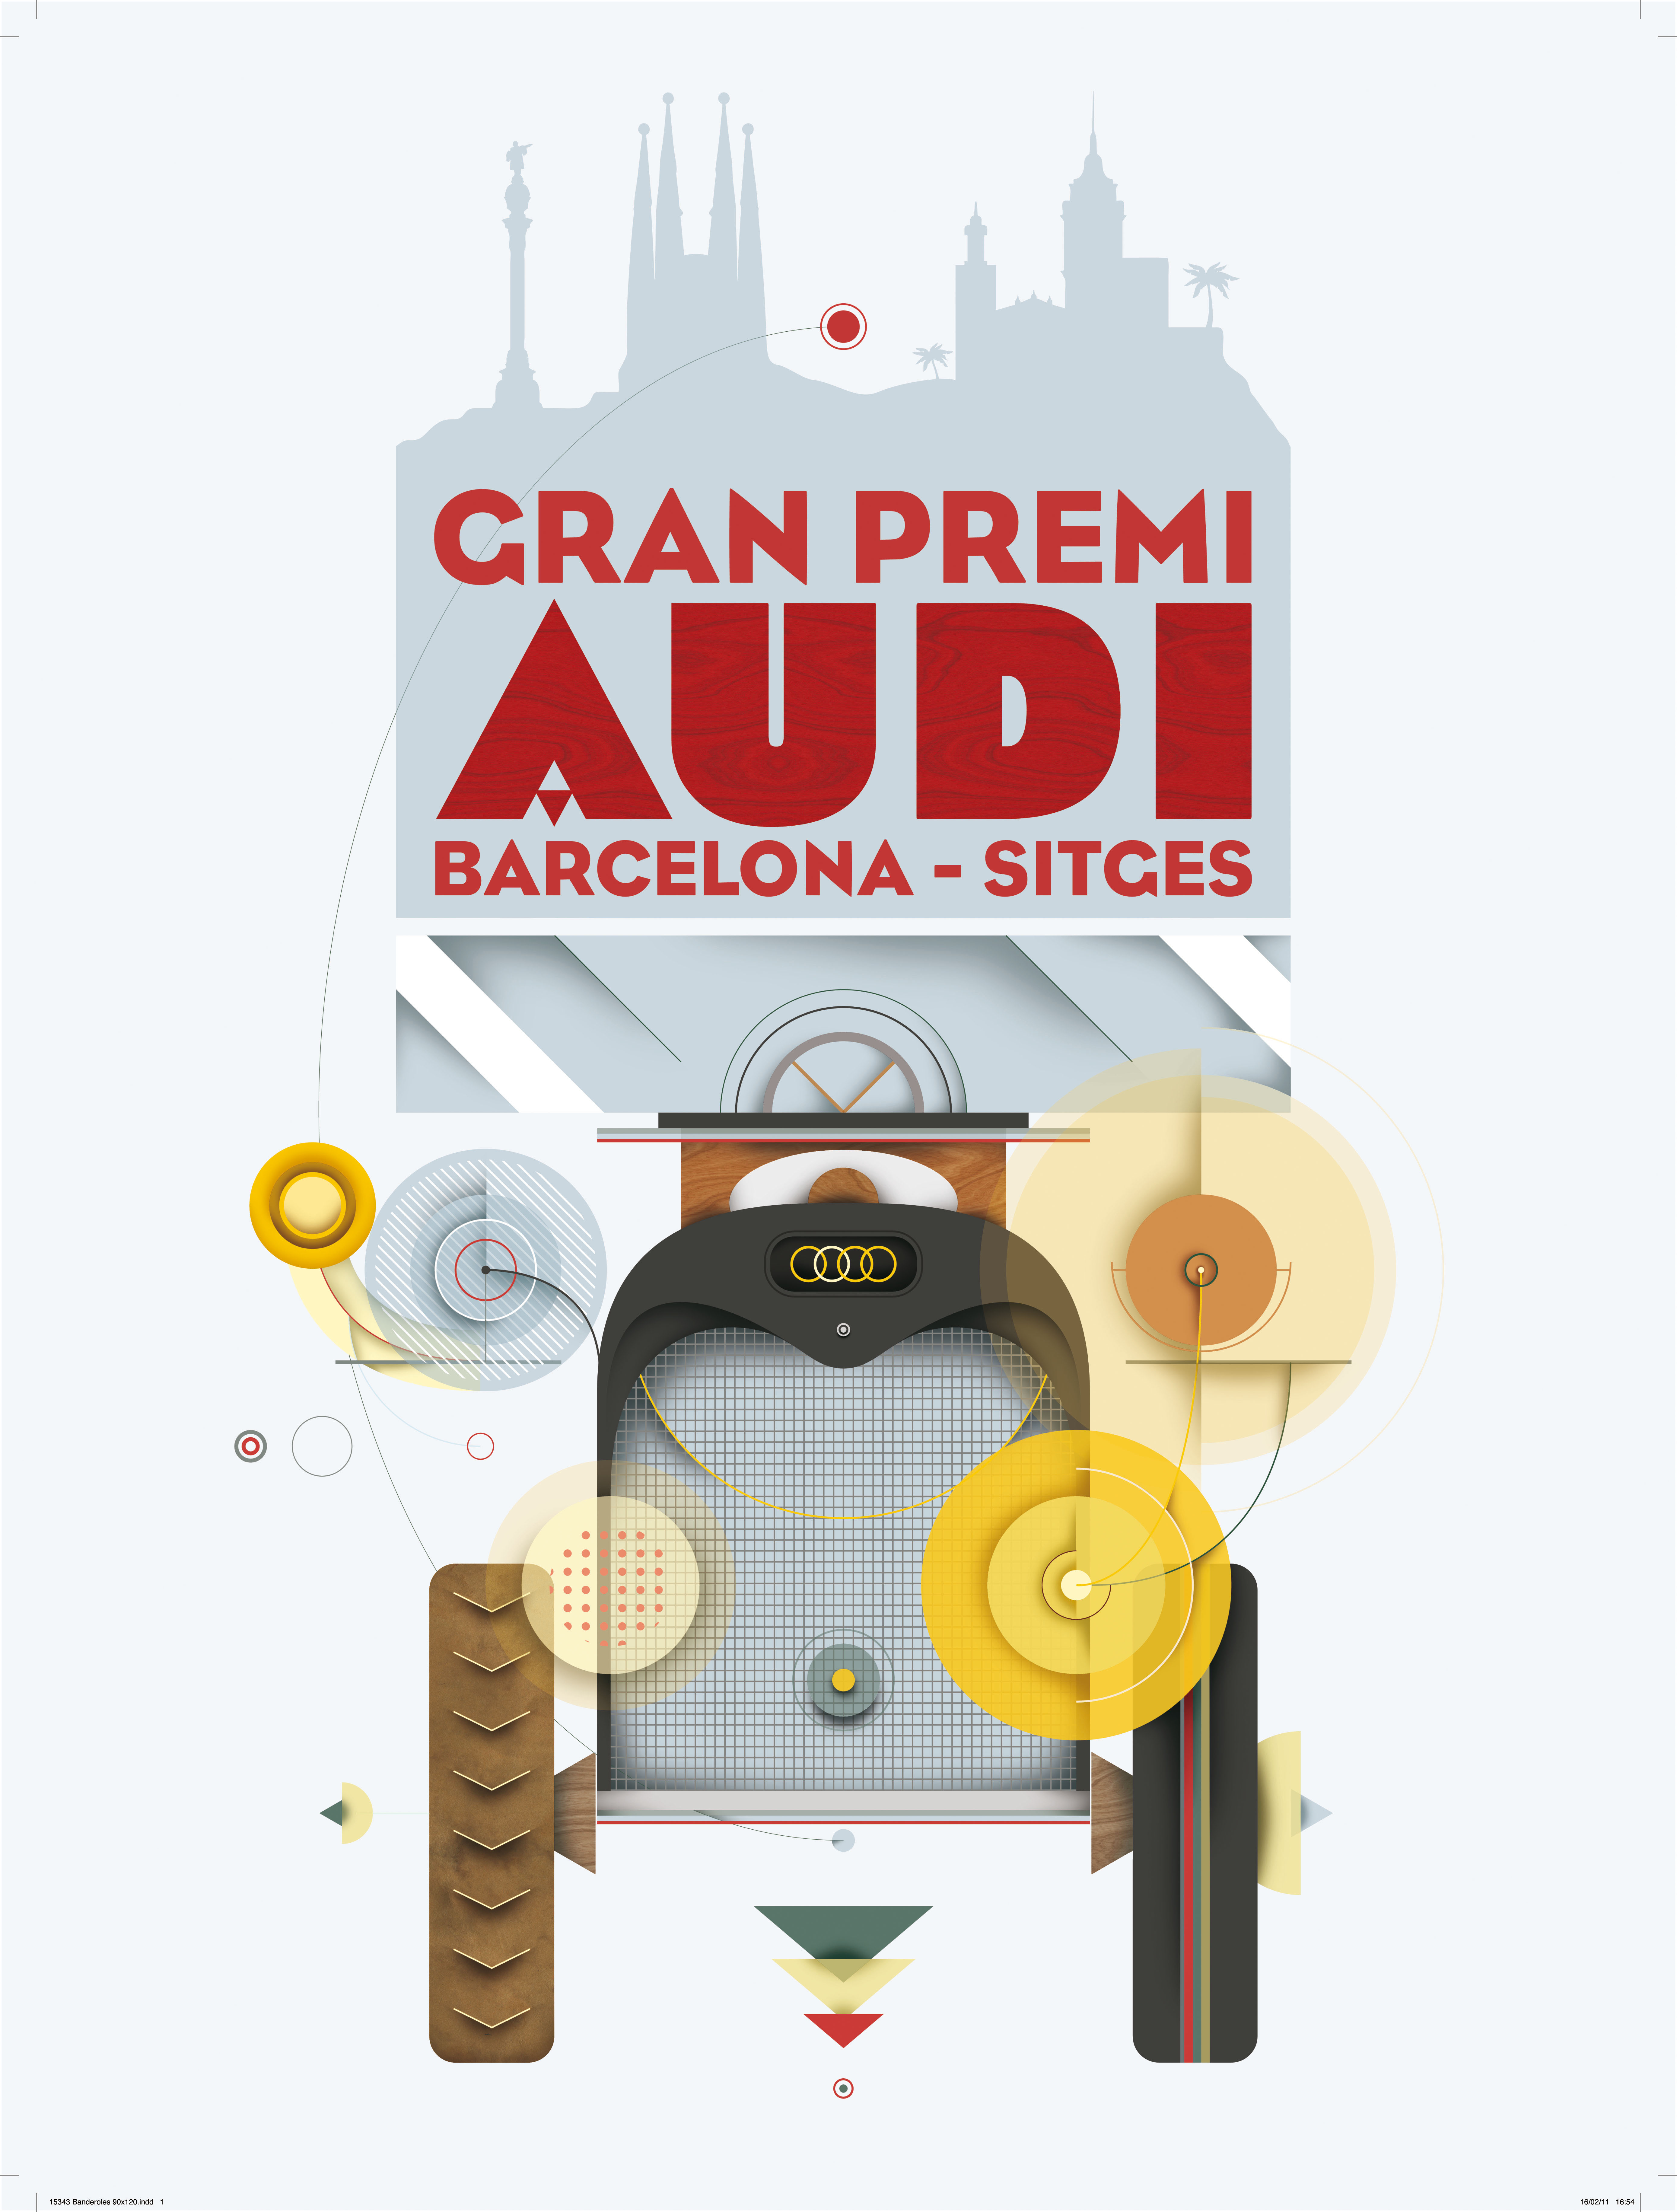 Audi patrocina el 53º Rallye Internacional de coches de Época Barcelona - Sitges